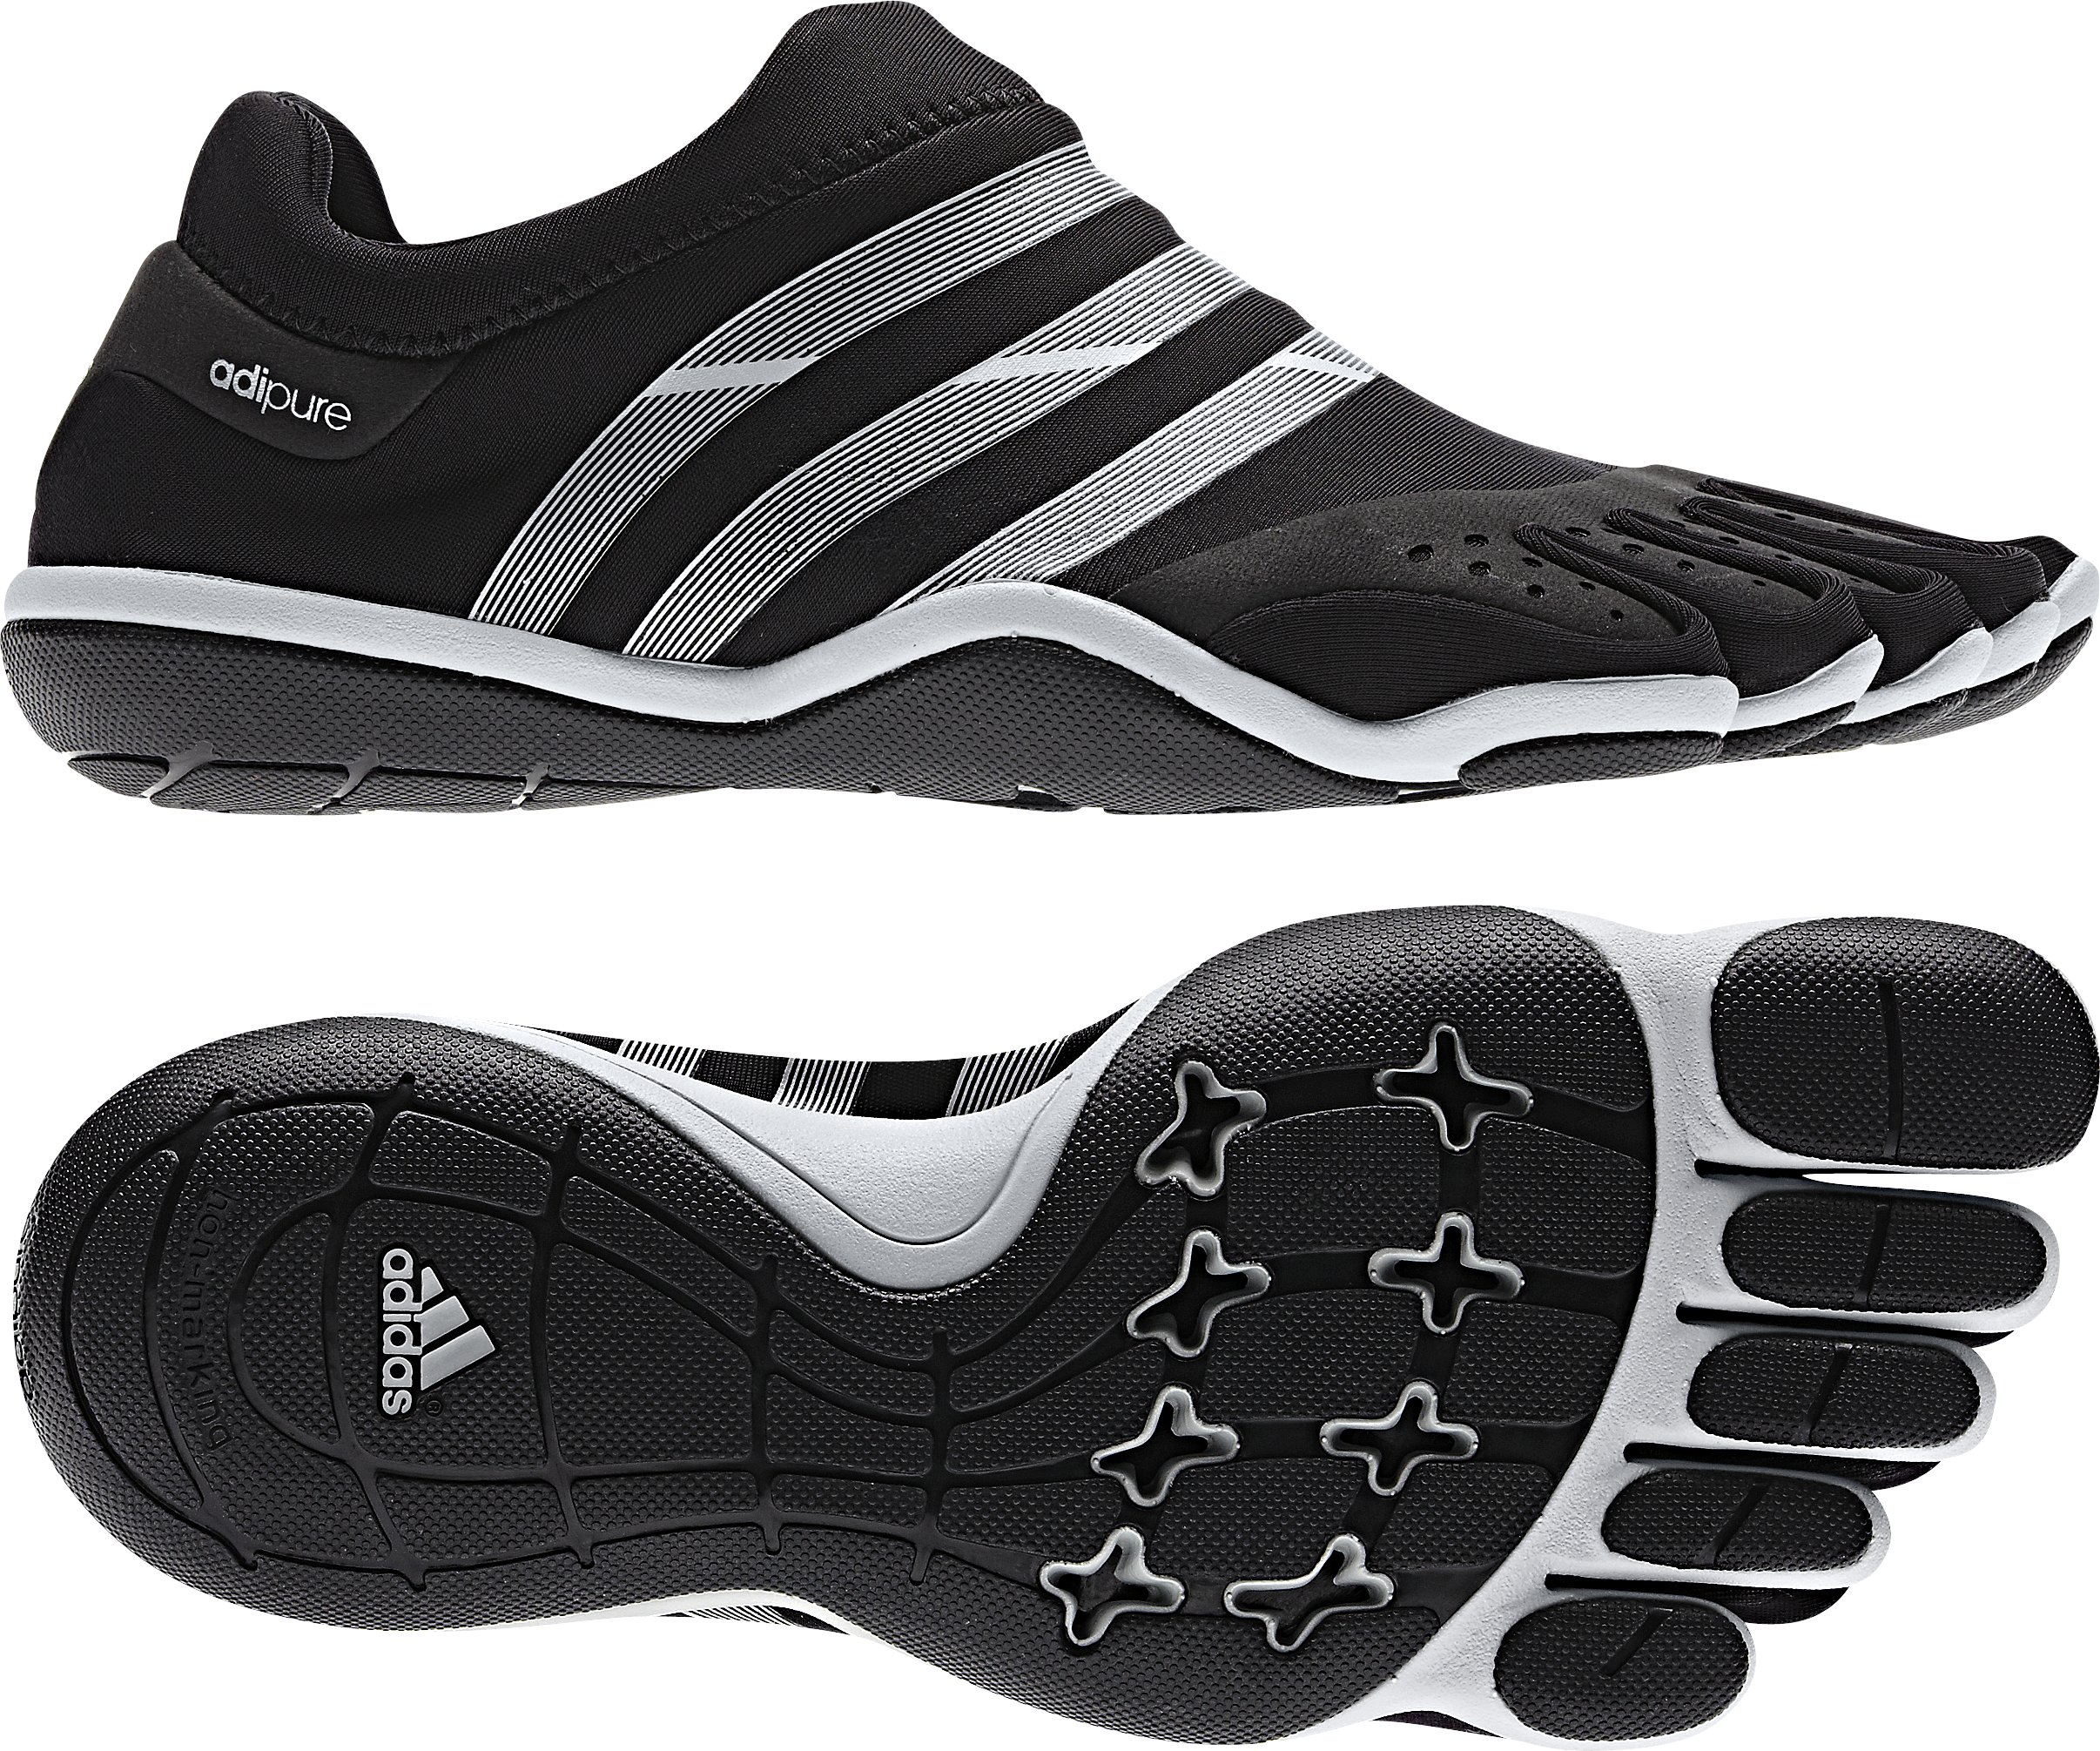 adidas adipure trainer vs vibram five fingers